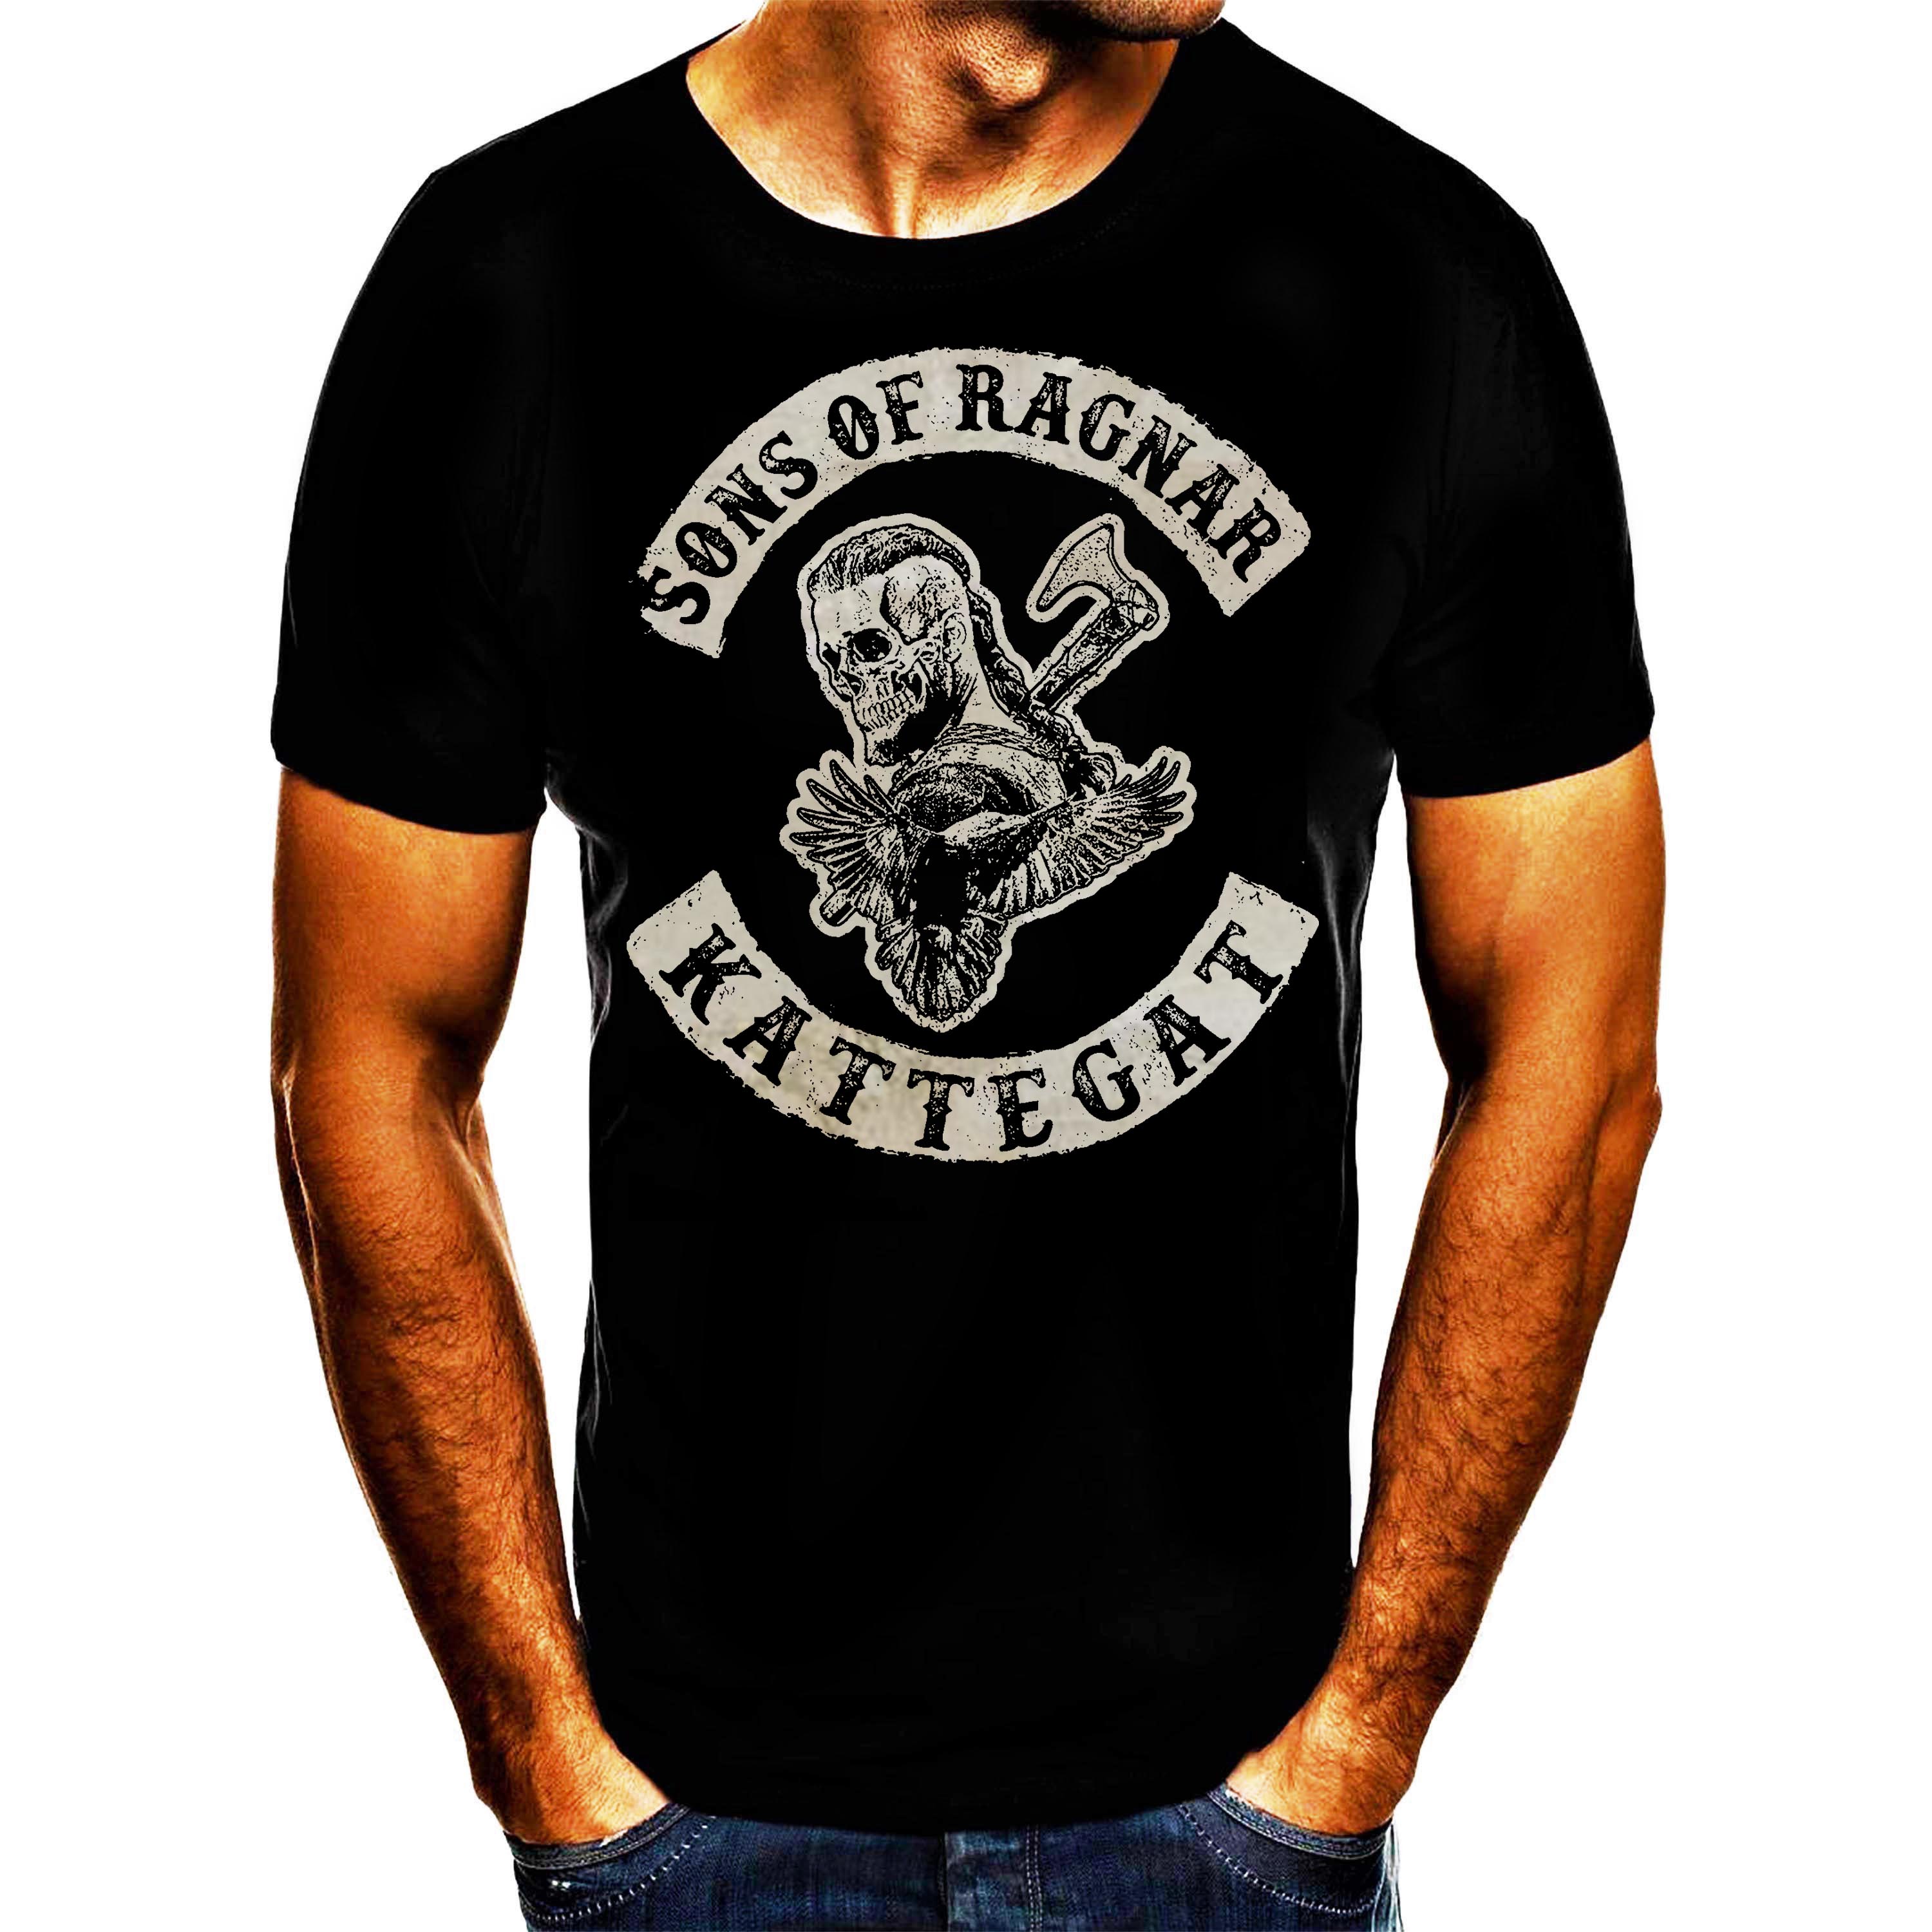 Shirtbude Zonen van Ragnar Vikings Valhalla shirt